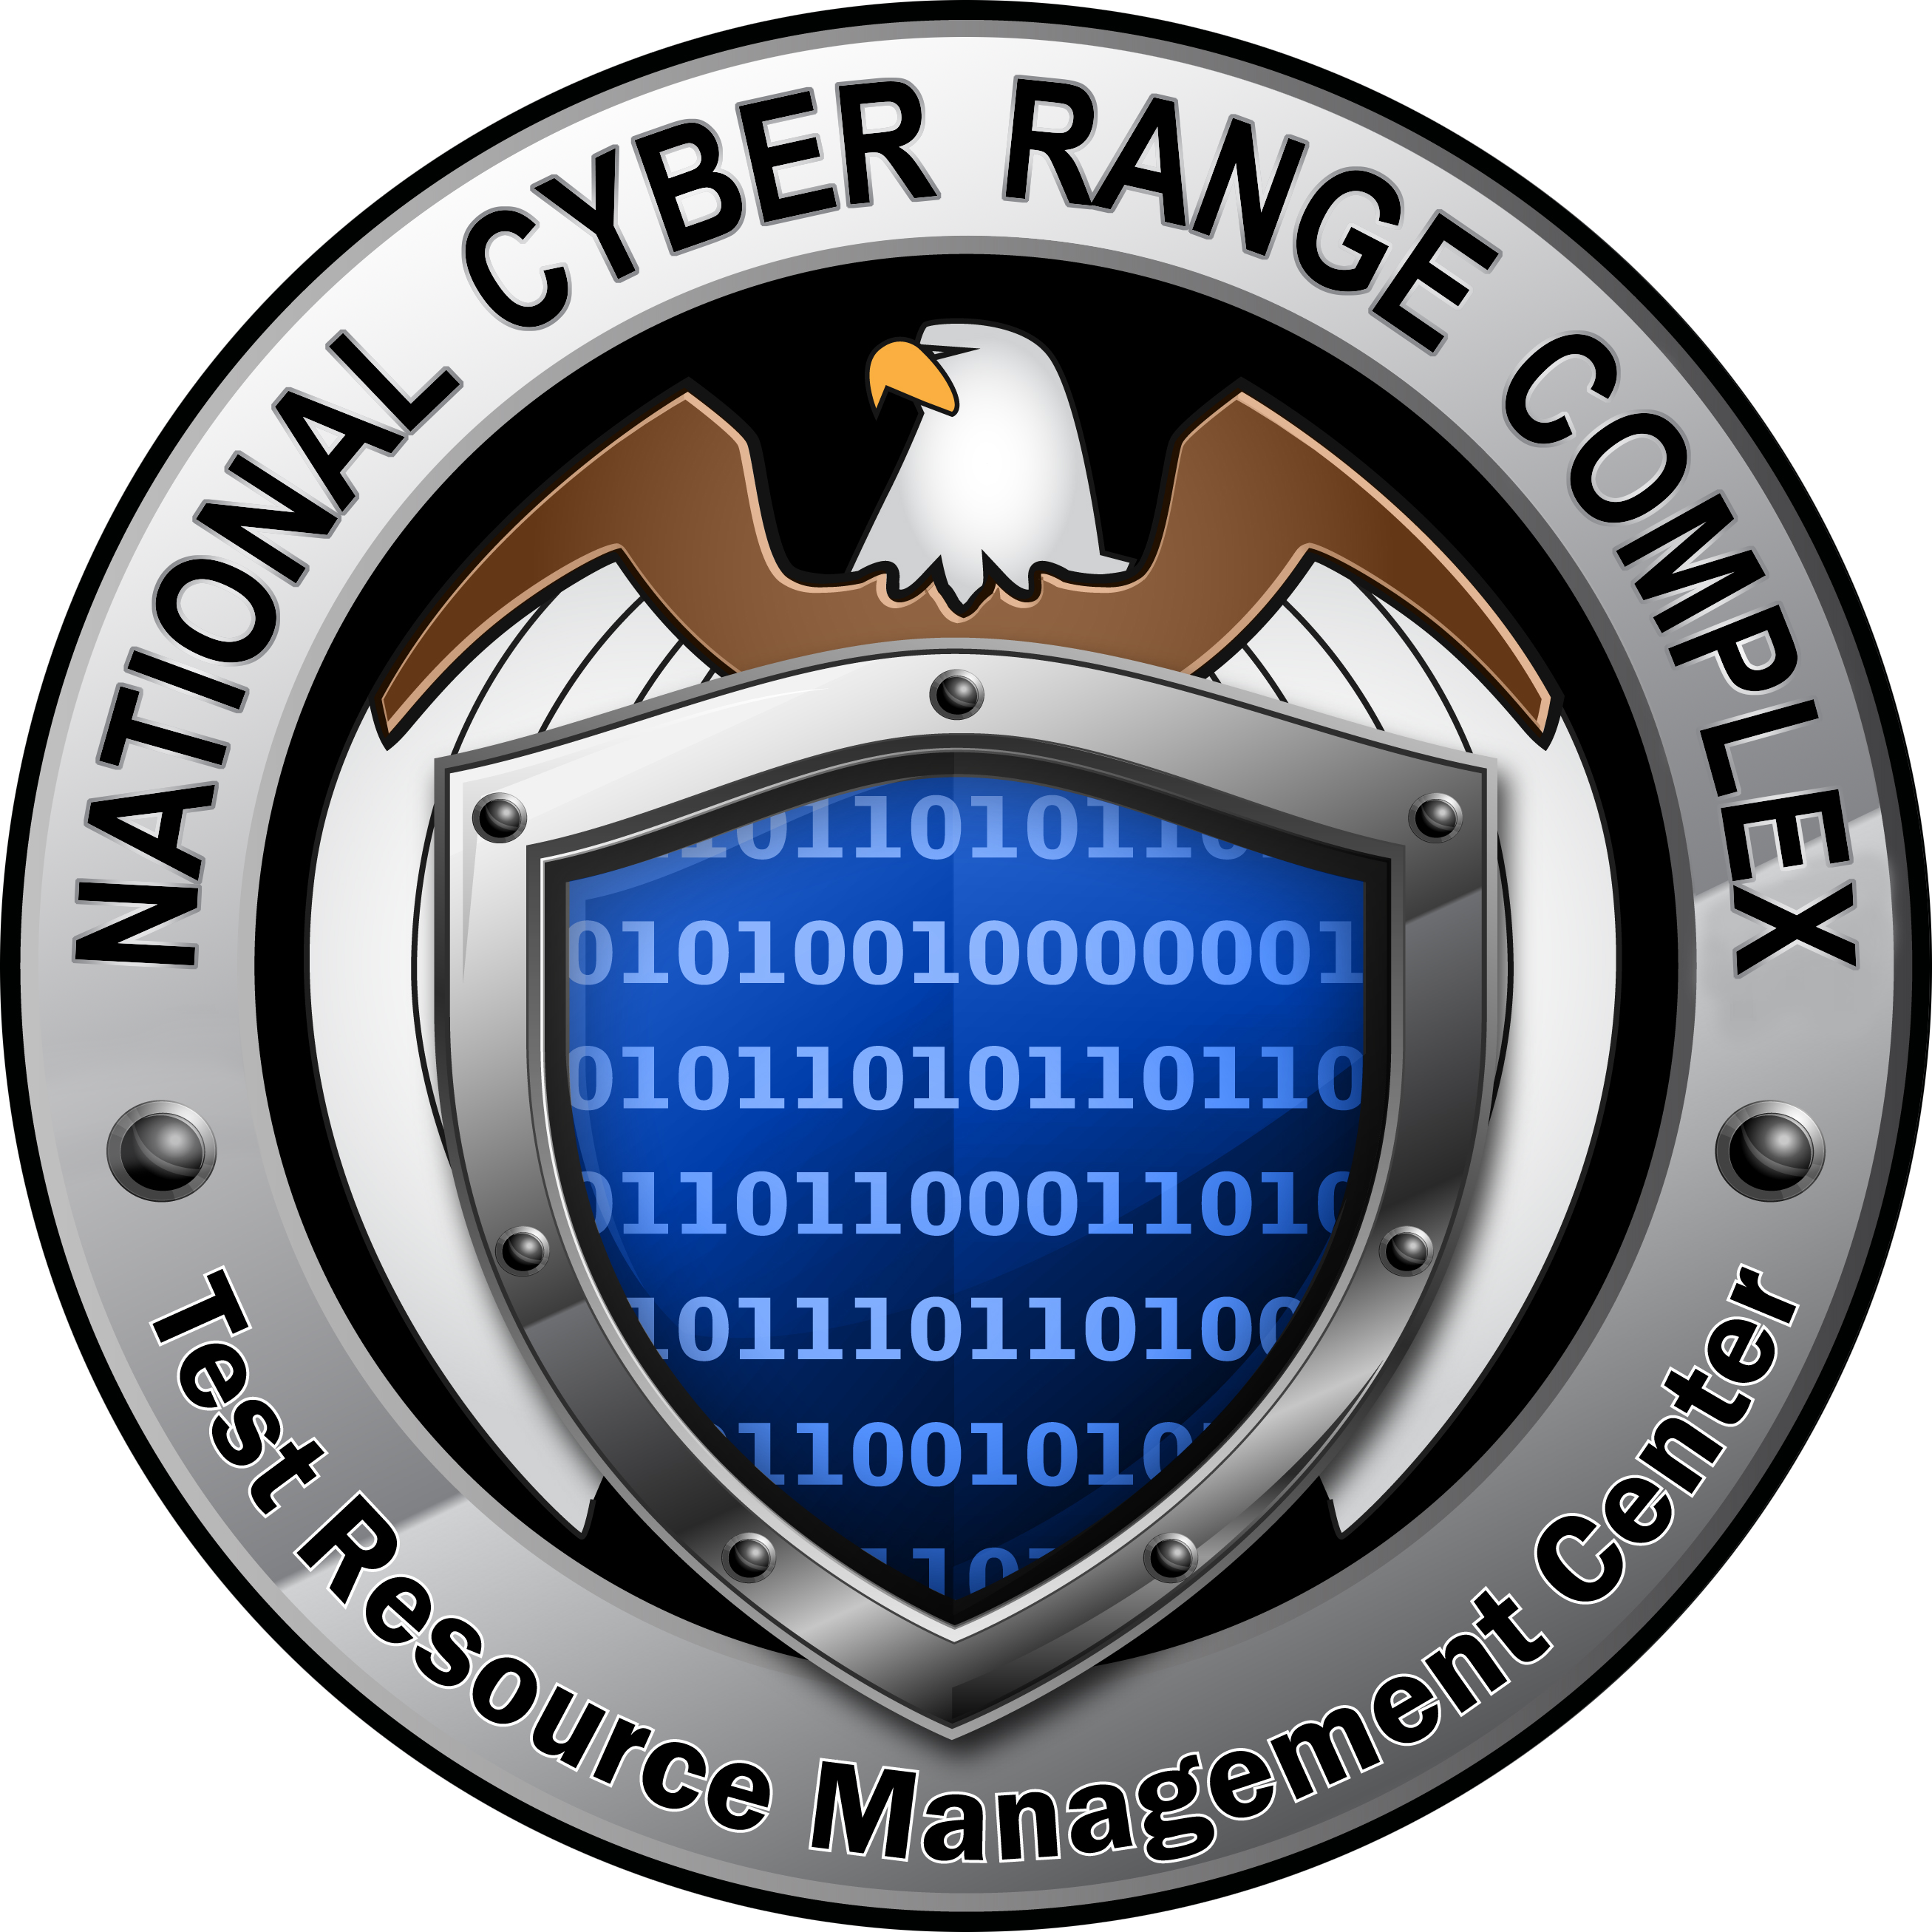 National Cyber Range